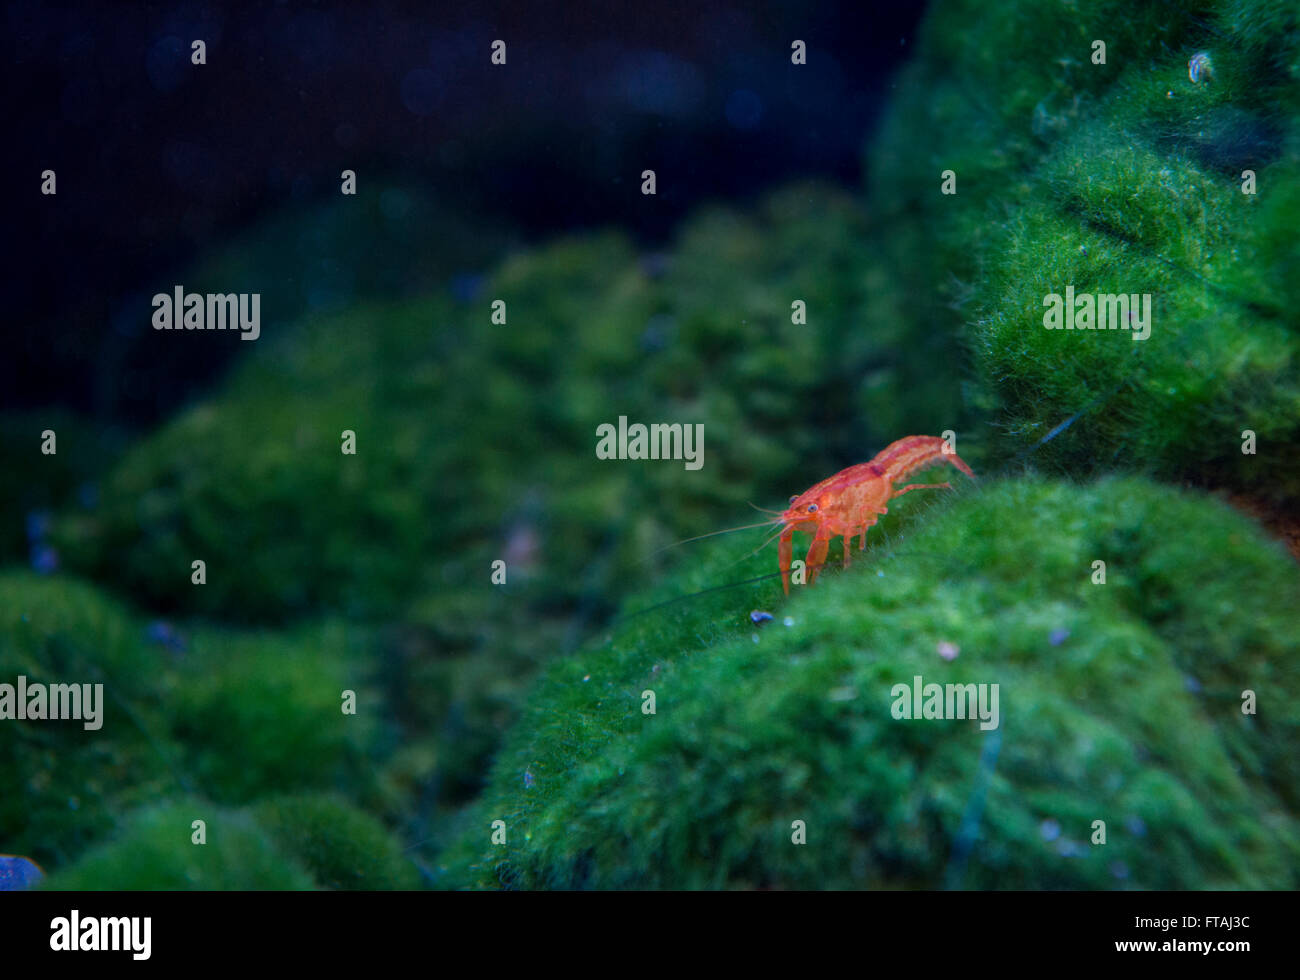 red cherry freshwater shrimp Stock Photo